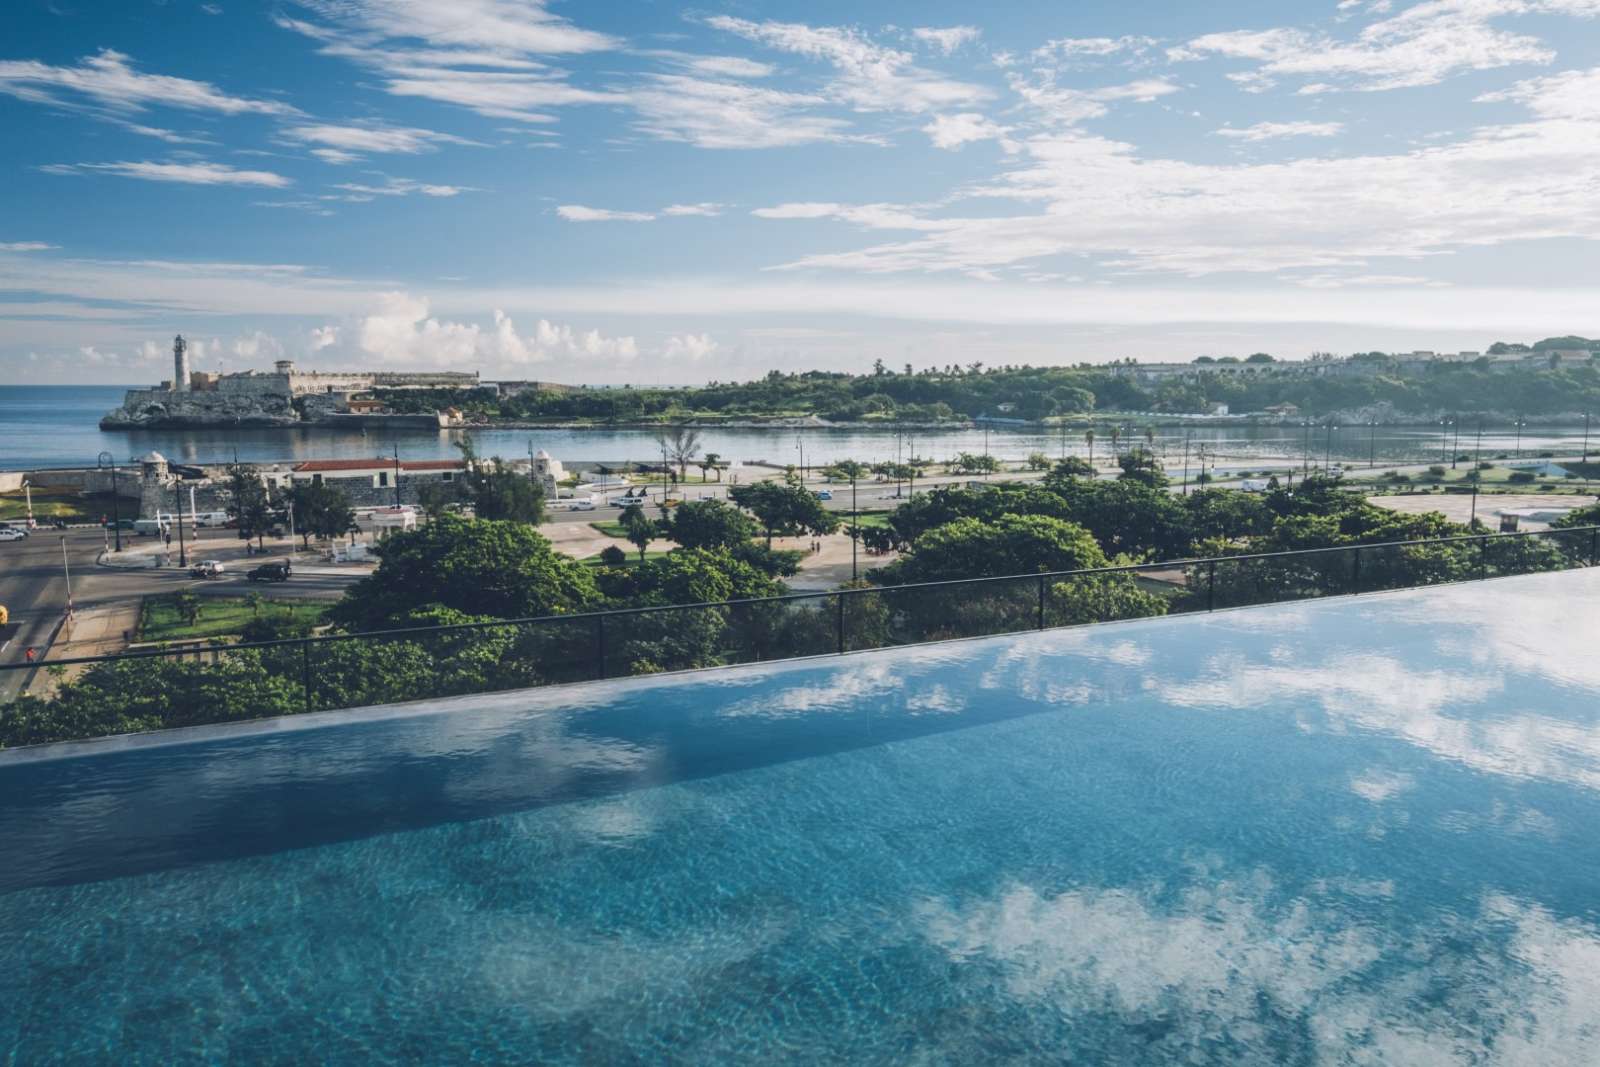 Pool view from the Iberostar Packard hotel in Old Havana, Cuba